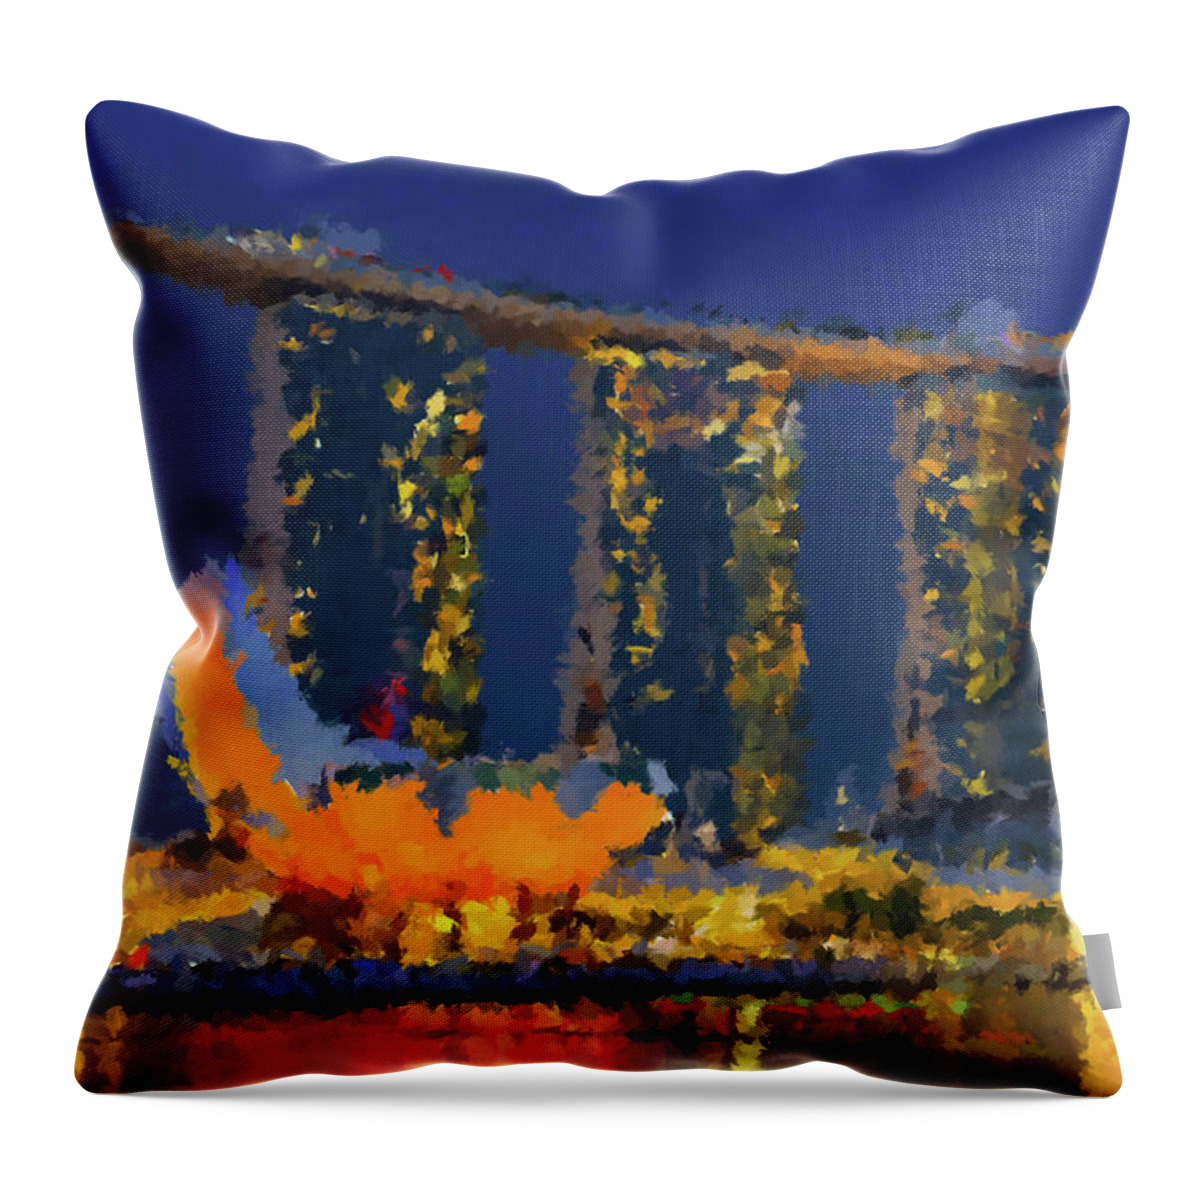 Marina Bay Throw Pillow featuring the mixed media Marina Bay Sands by Alex Mir